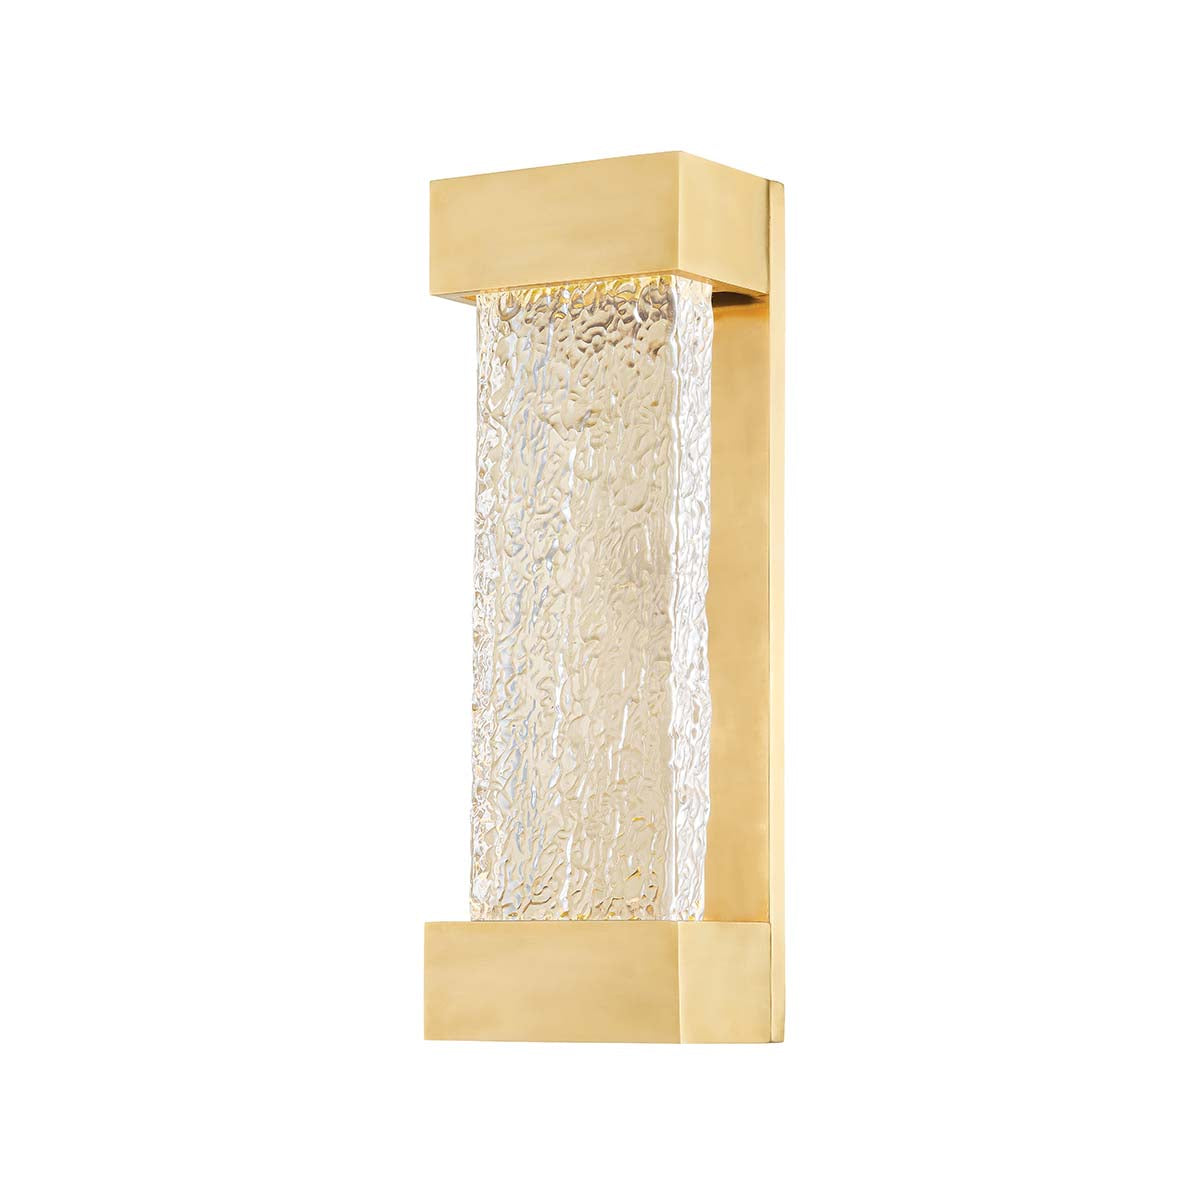 Hudson Valley Lighting Tannersville Ice Glass 1 Light Wall Sconce - Aged Brass